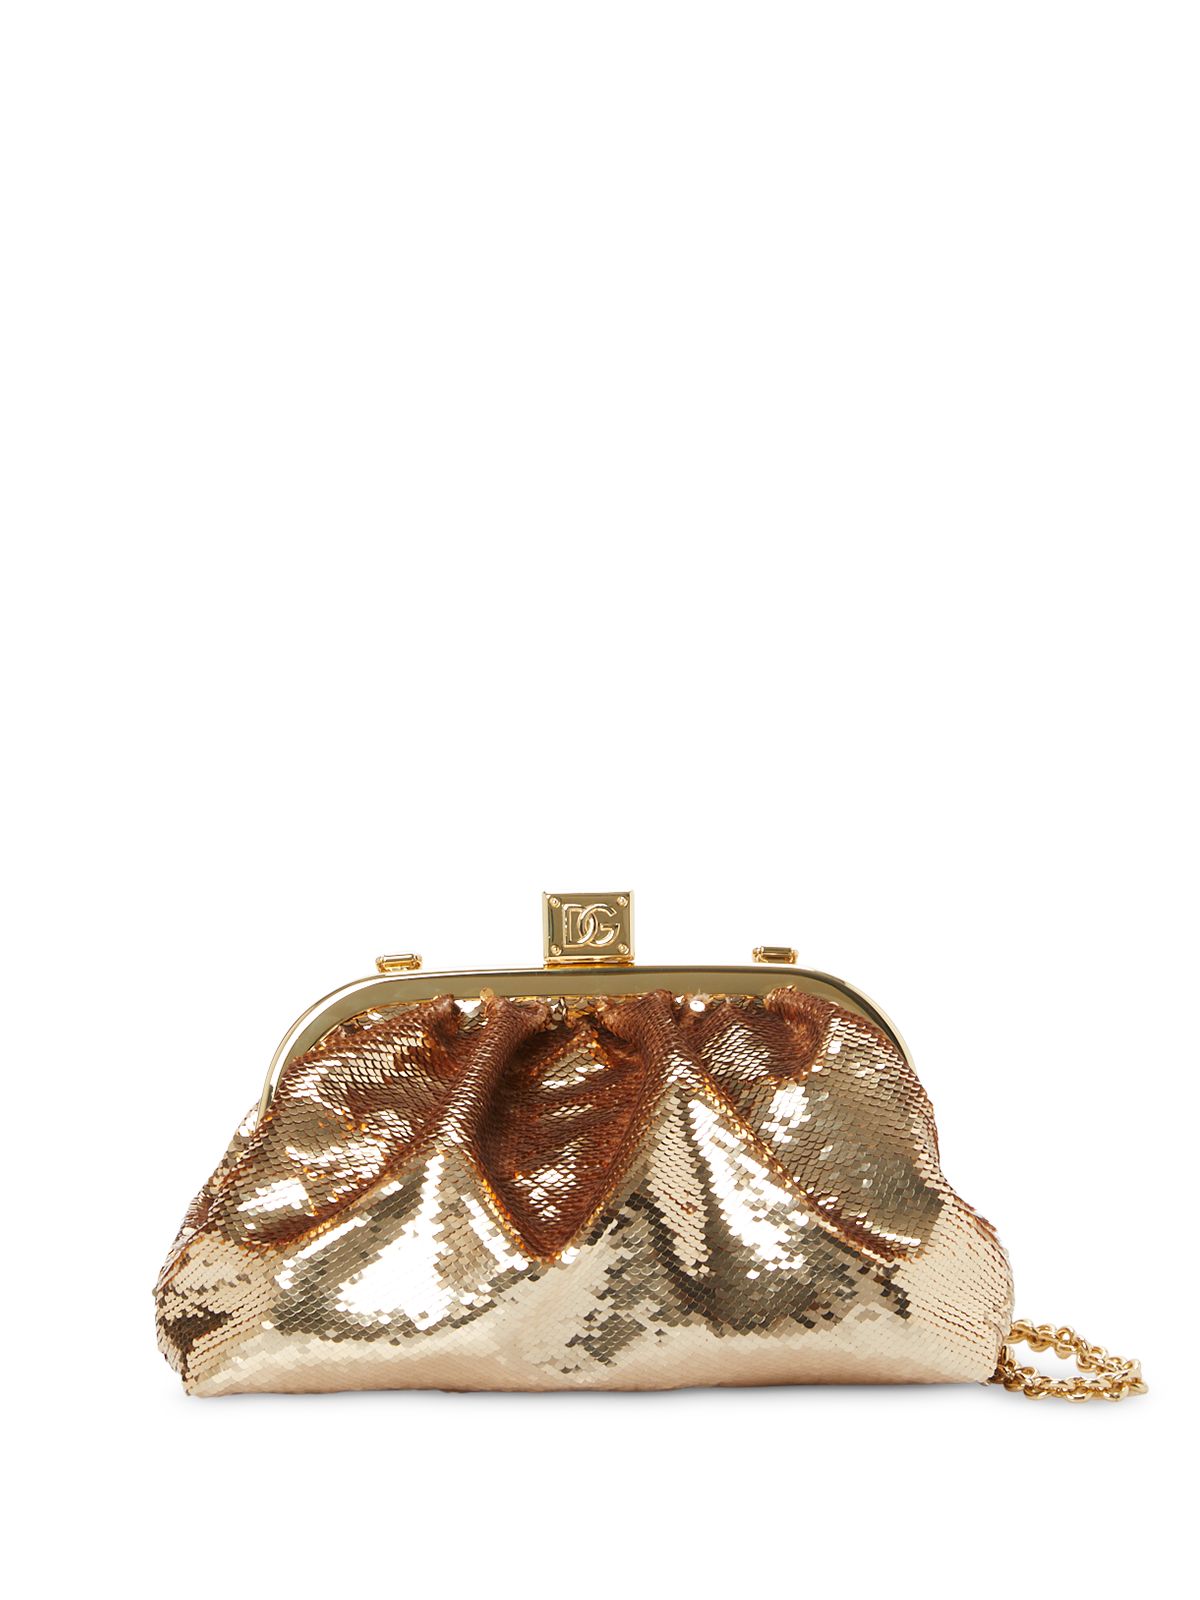 DOLCE & GABBANA Women's Gold Sequined Solid Chain Strap Clutch Handbag Purse